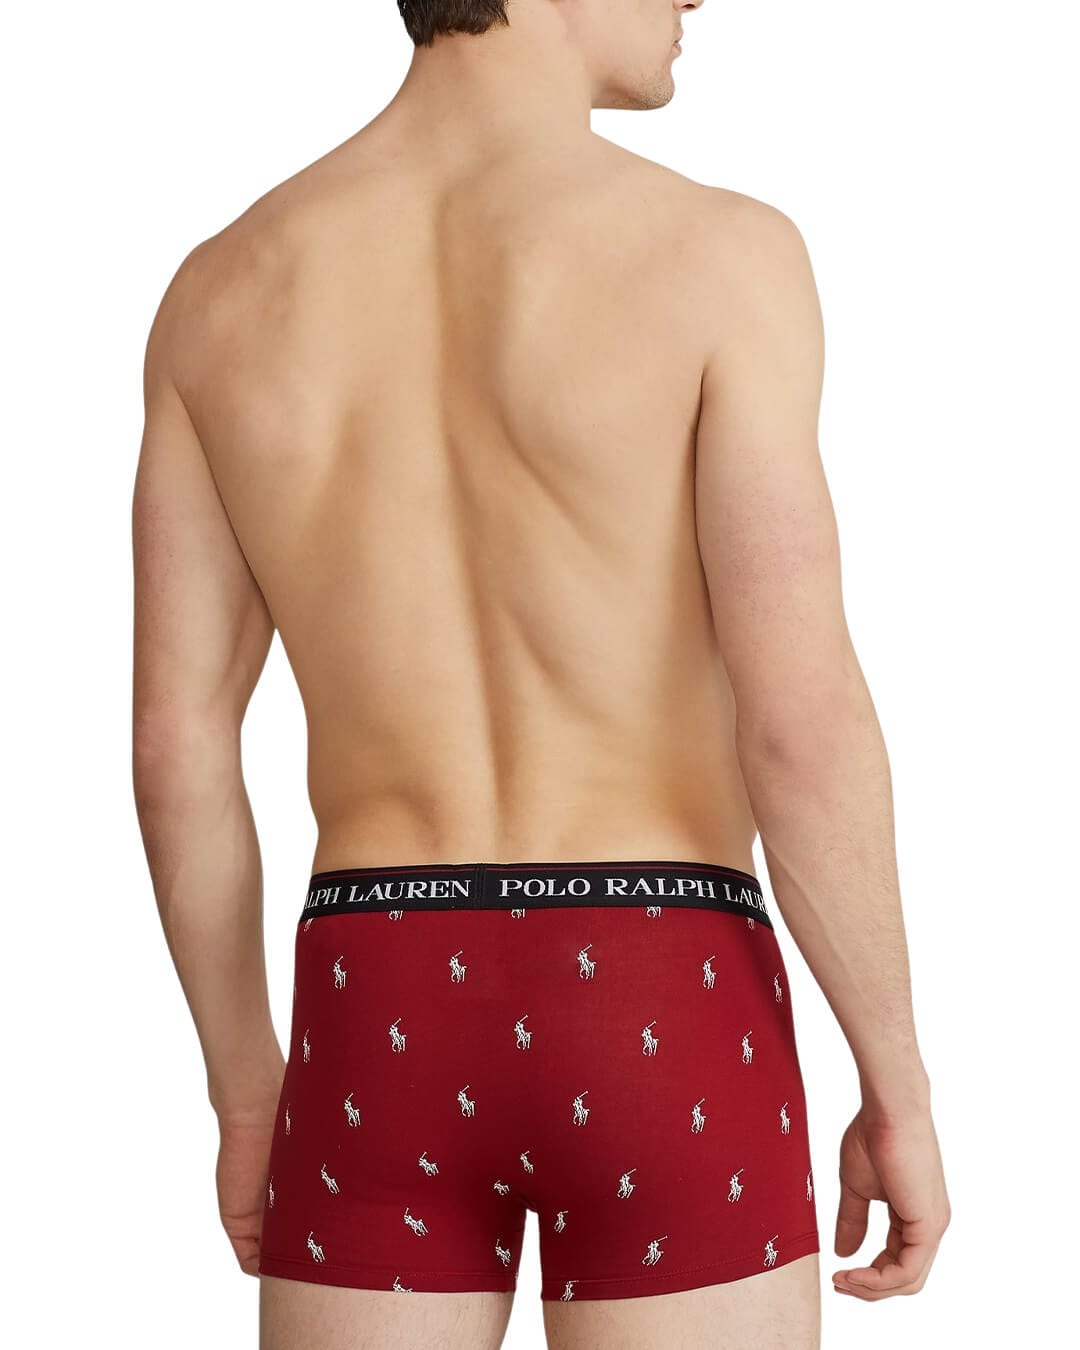 Polo Ralph Lauren Underwear Polo Ralph Lauren Red, Black And Grey Three-Pack Trunks